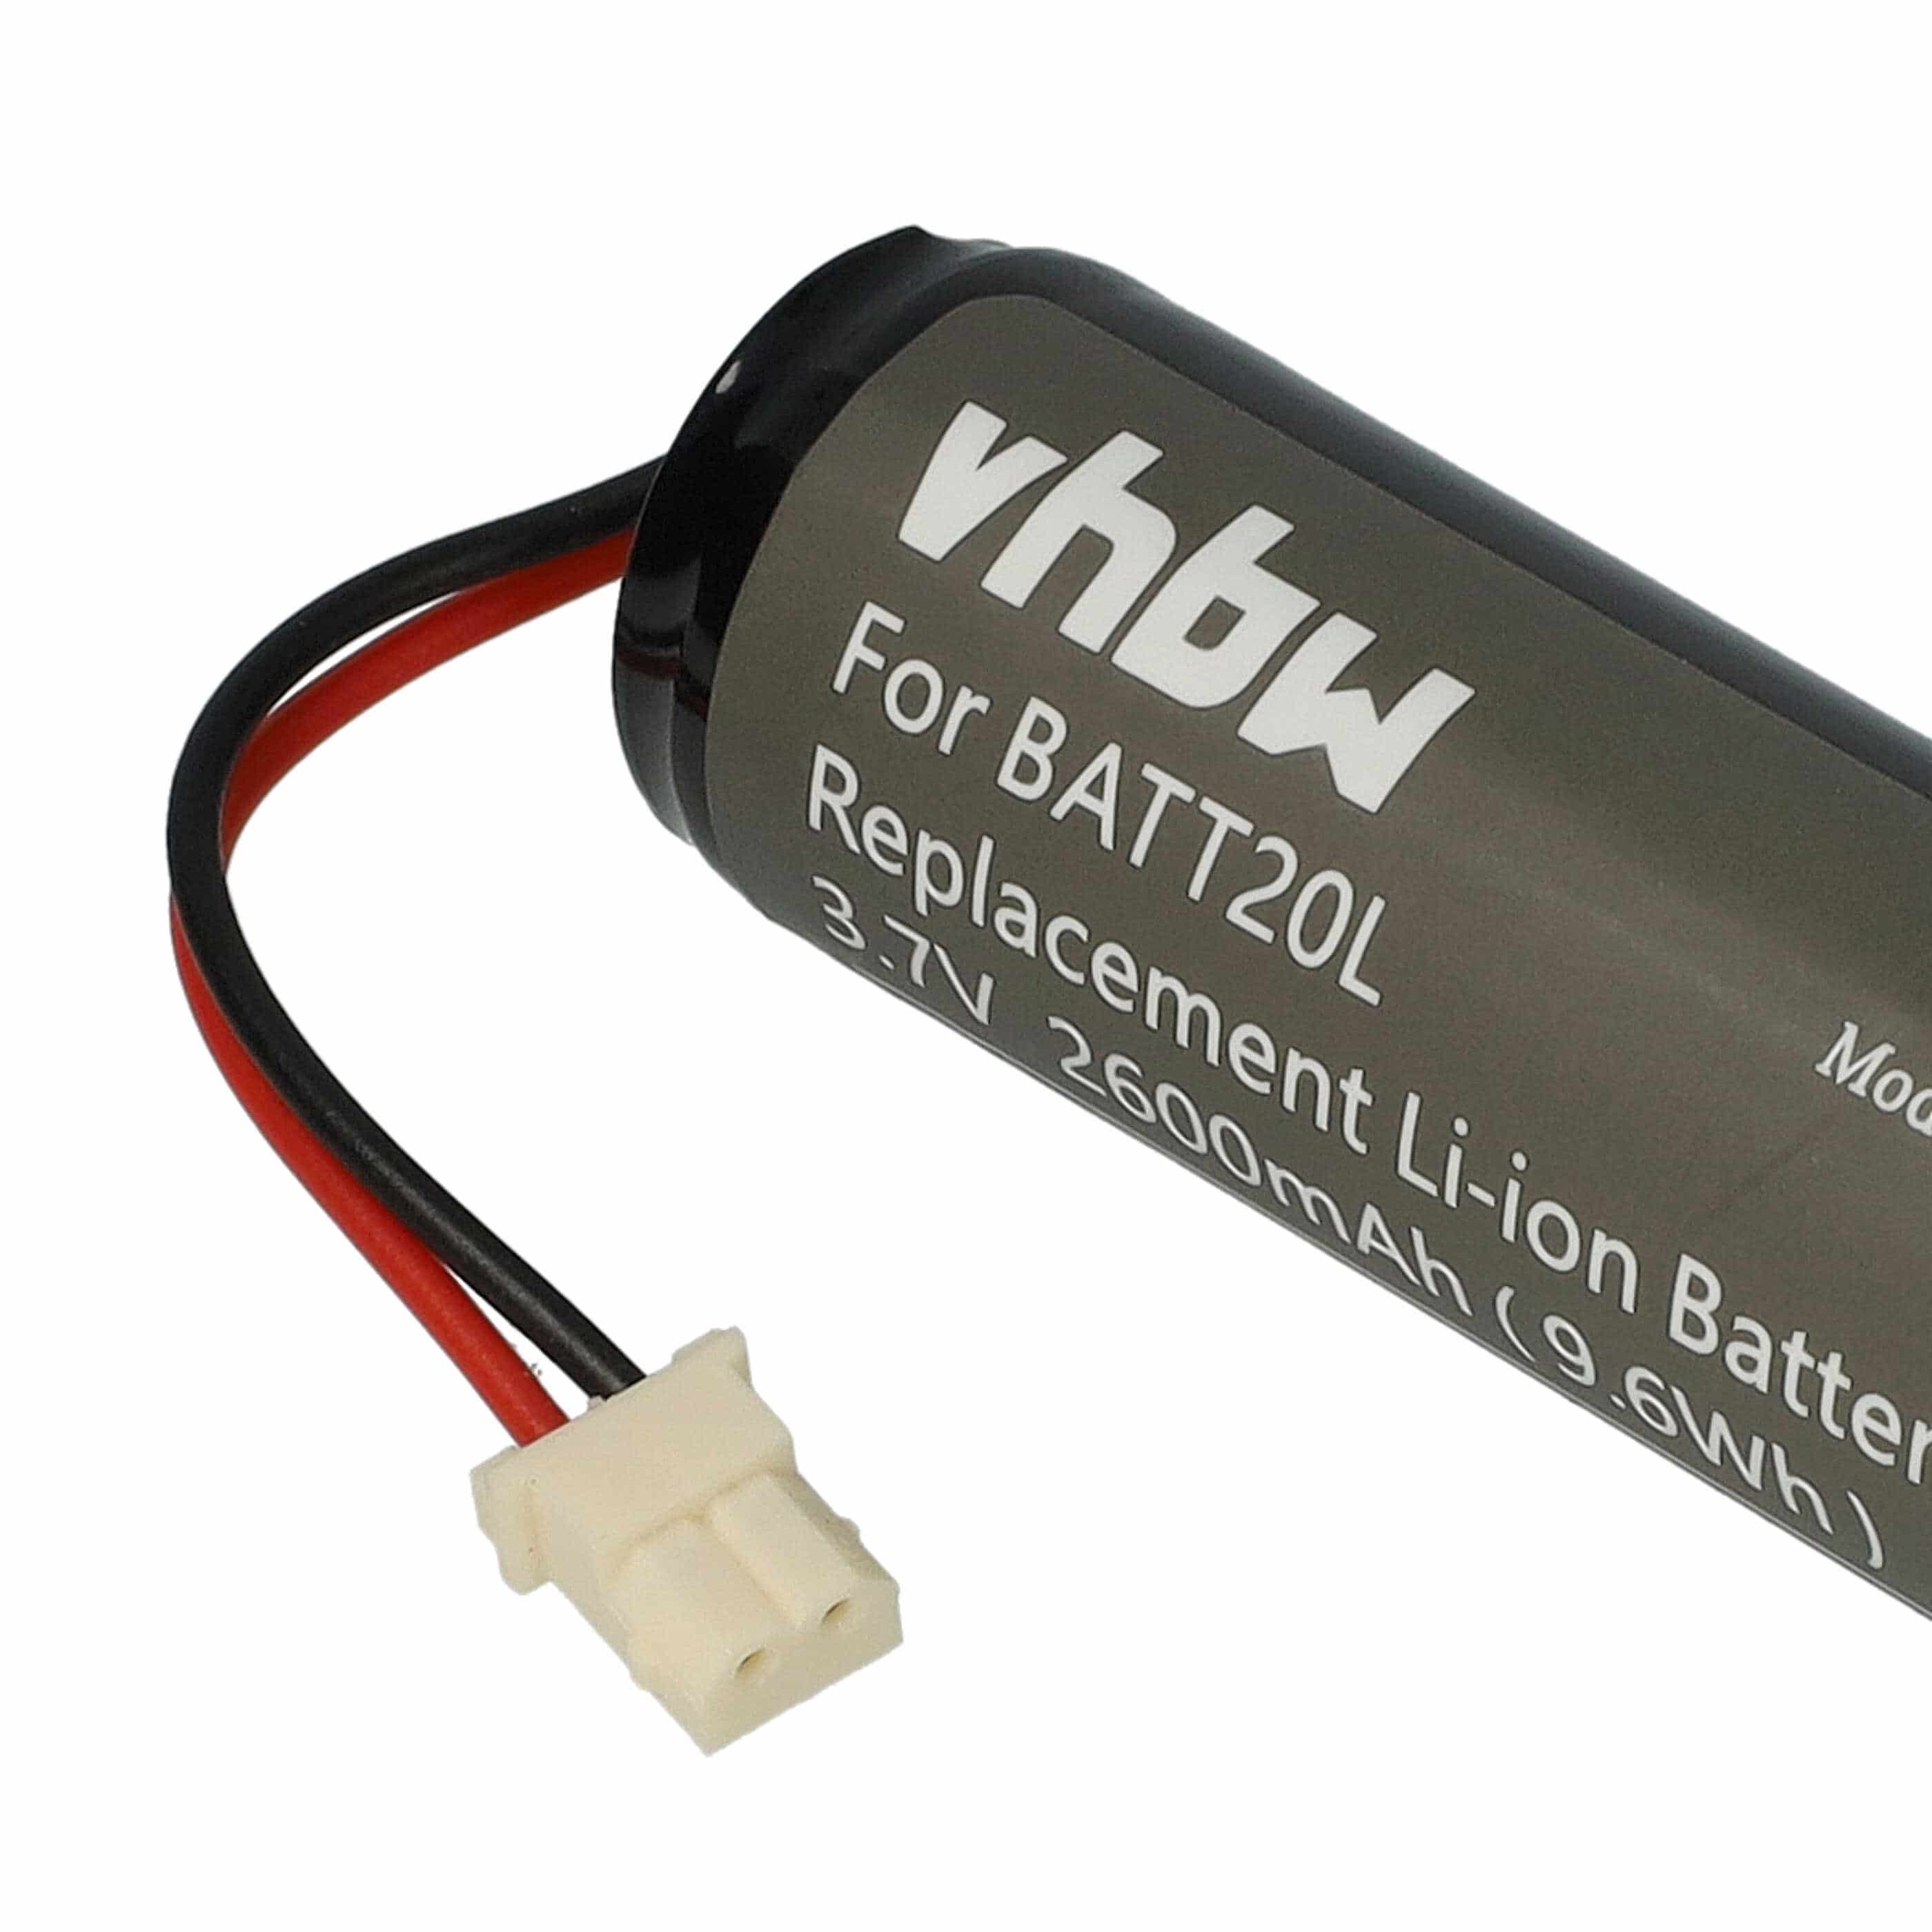 Batteria per digital radio sostituisce BATT20L Midland - 2600mAh 3,7V Li-Ion